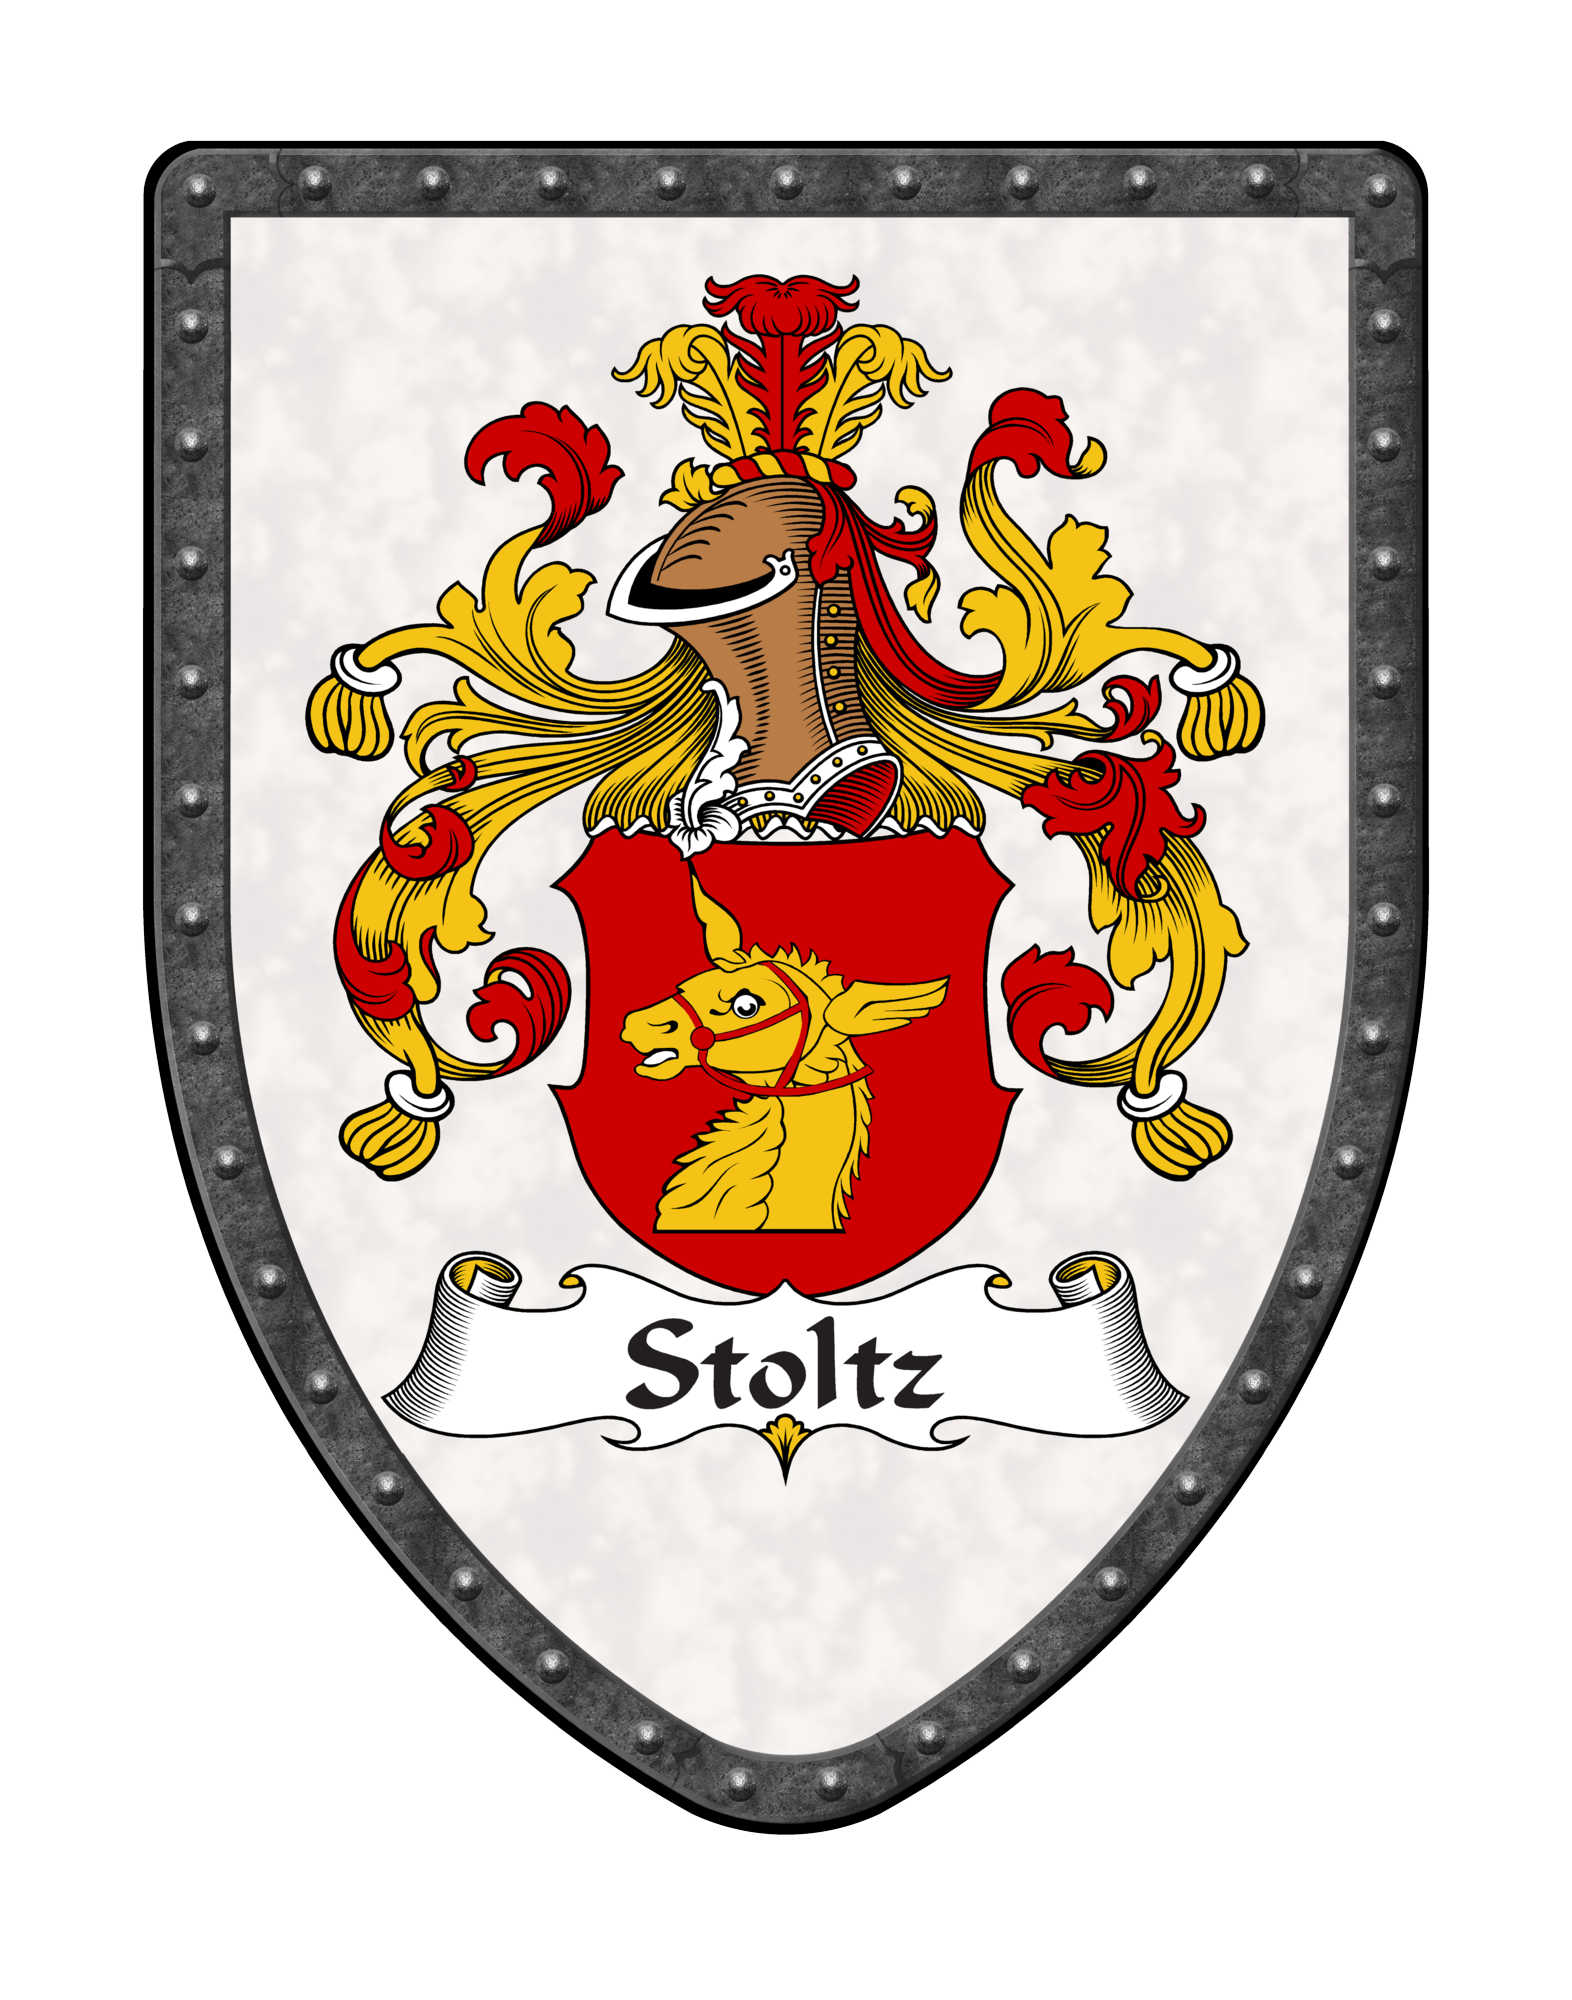 Custom Family Coat of Arms by Swordsandarmor.com